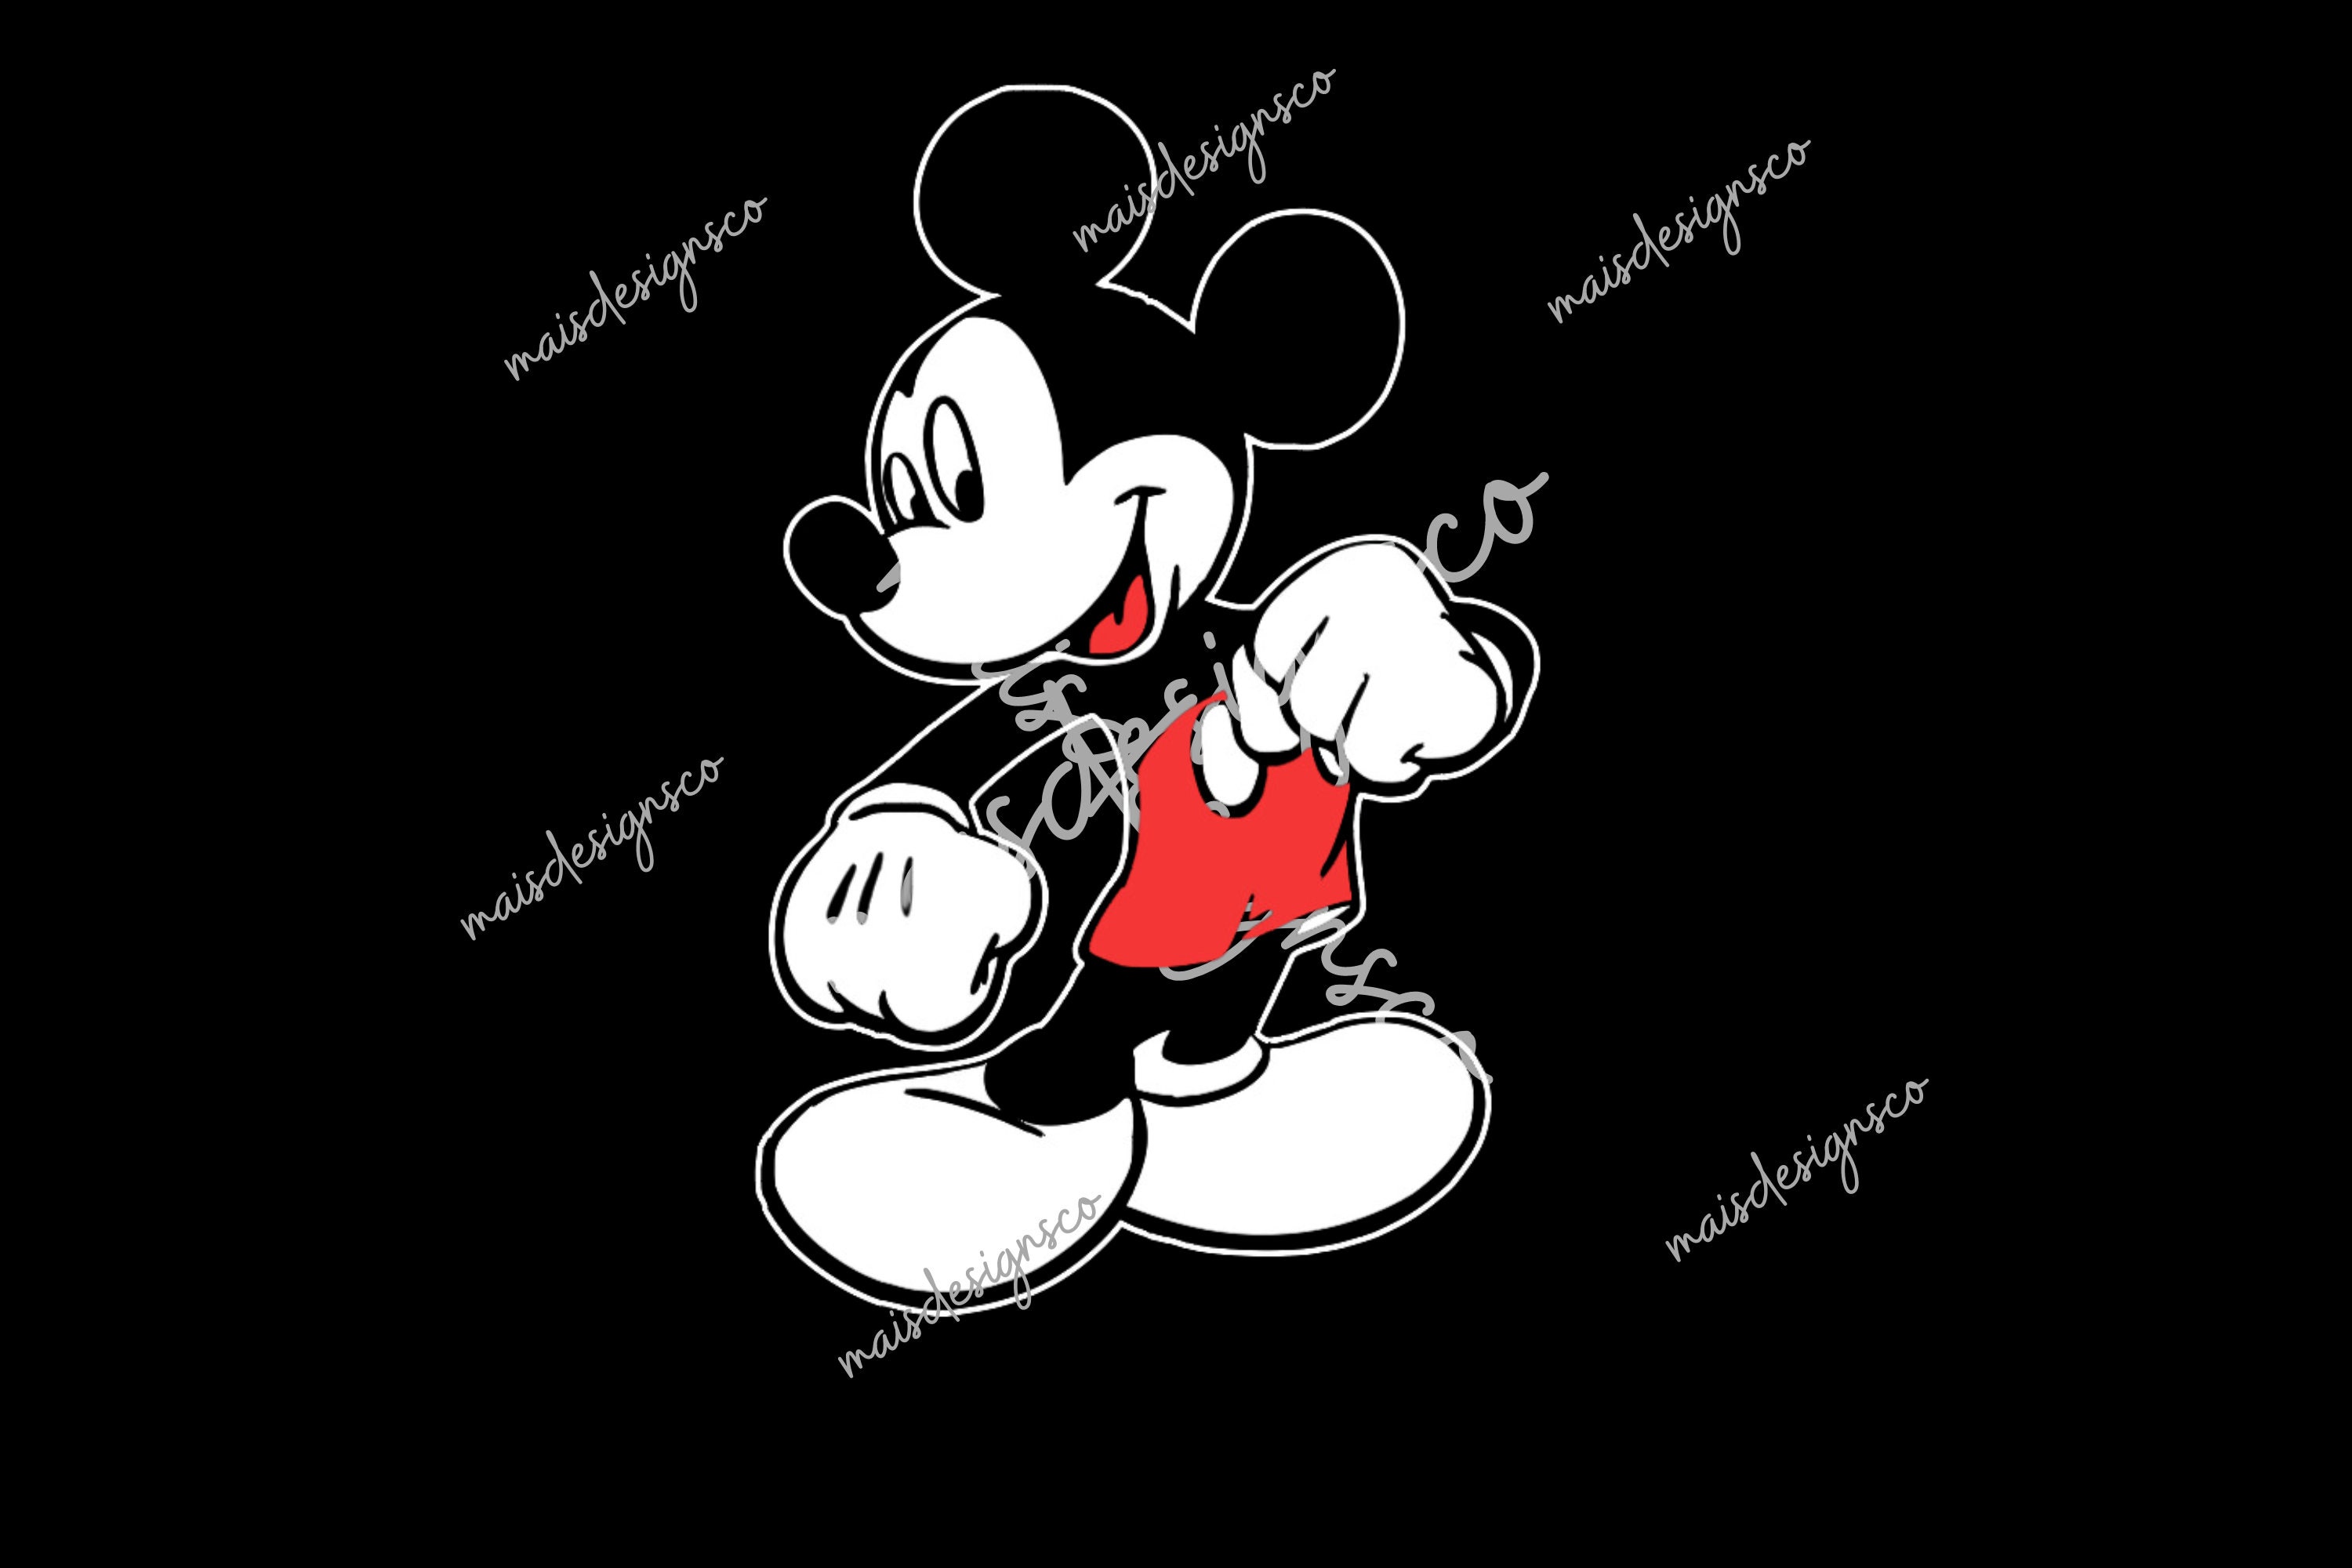 Autocollants Disney Mickey &Minnie Mouse Disney Autocollants vinyles  imperméables Feuille dautocollants -  France